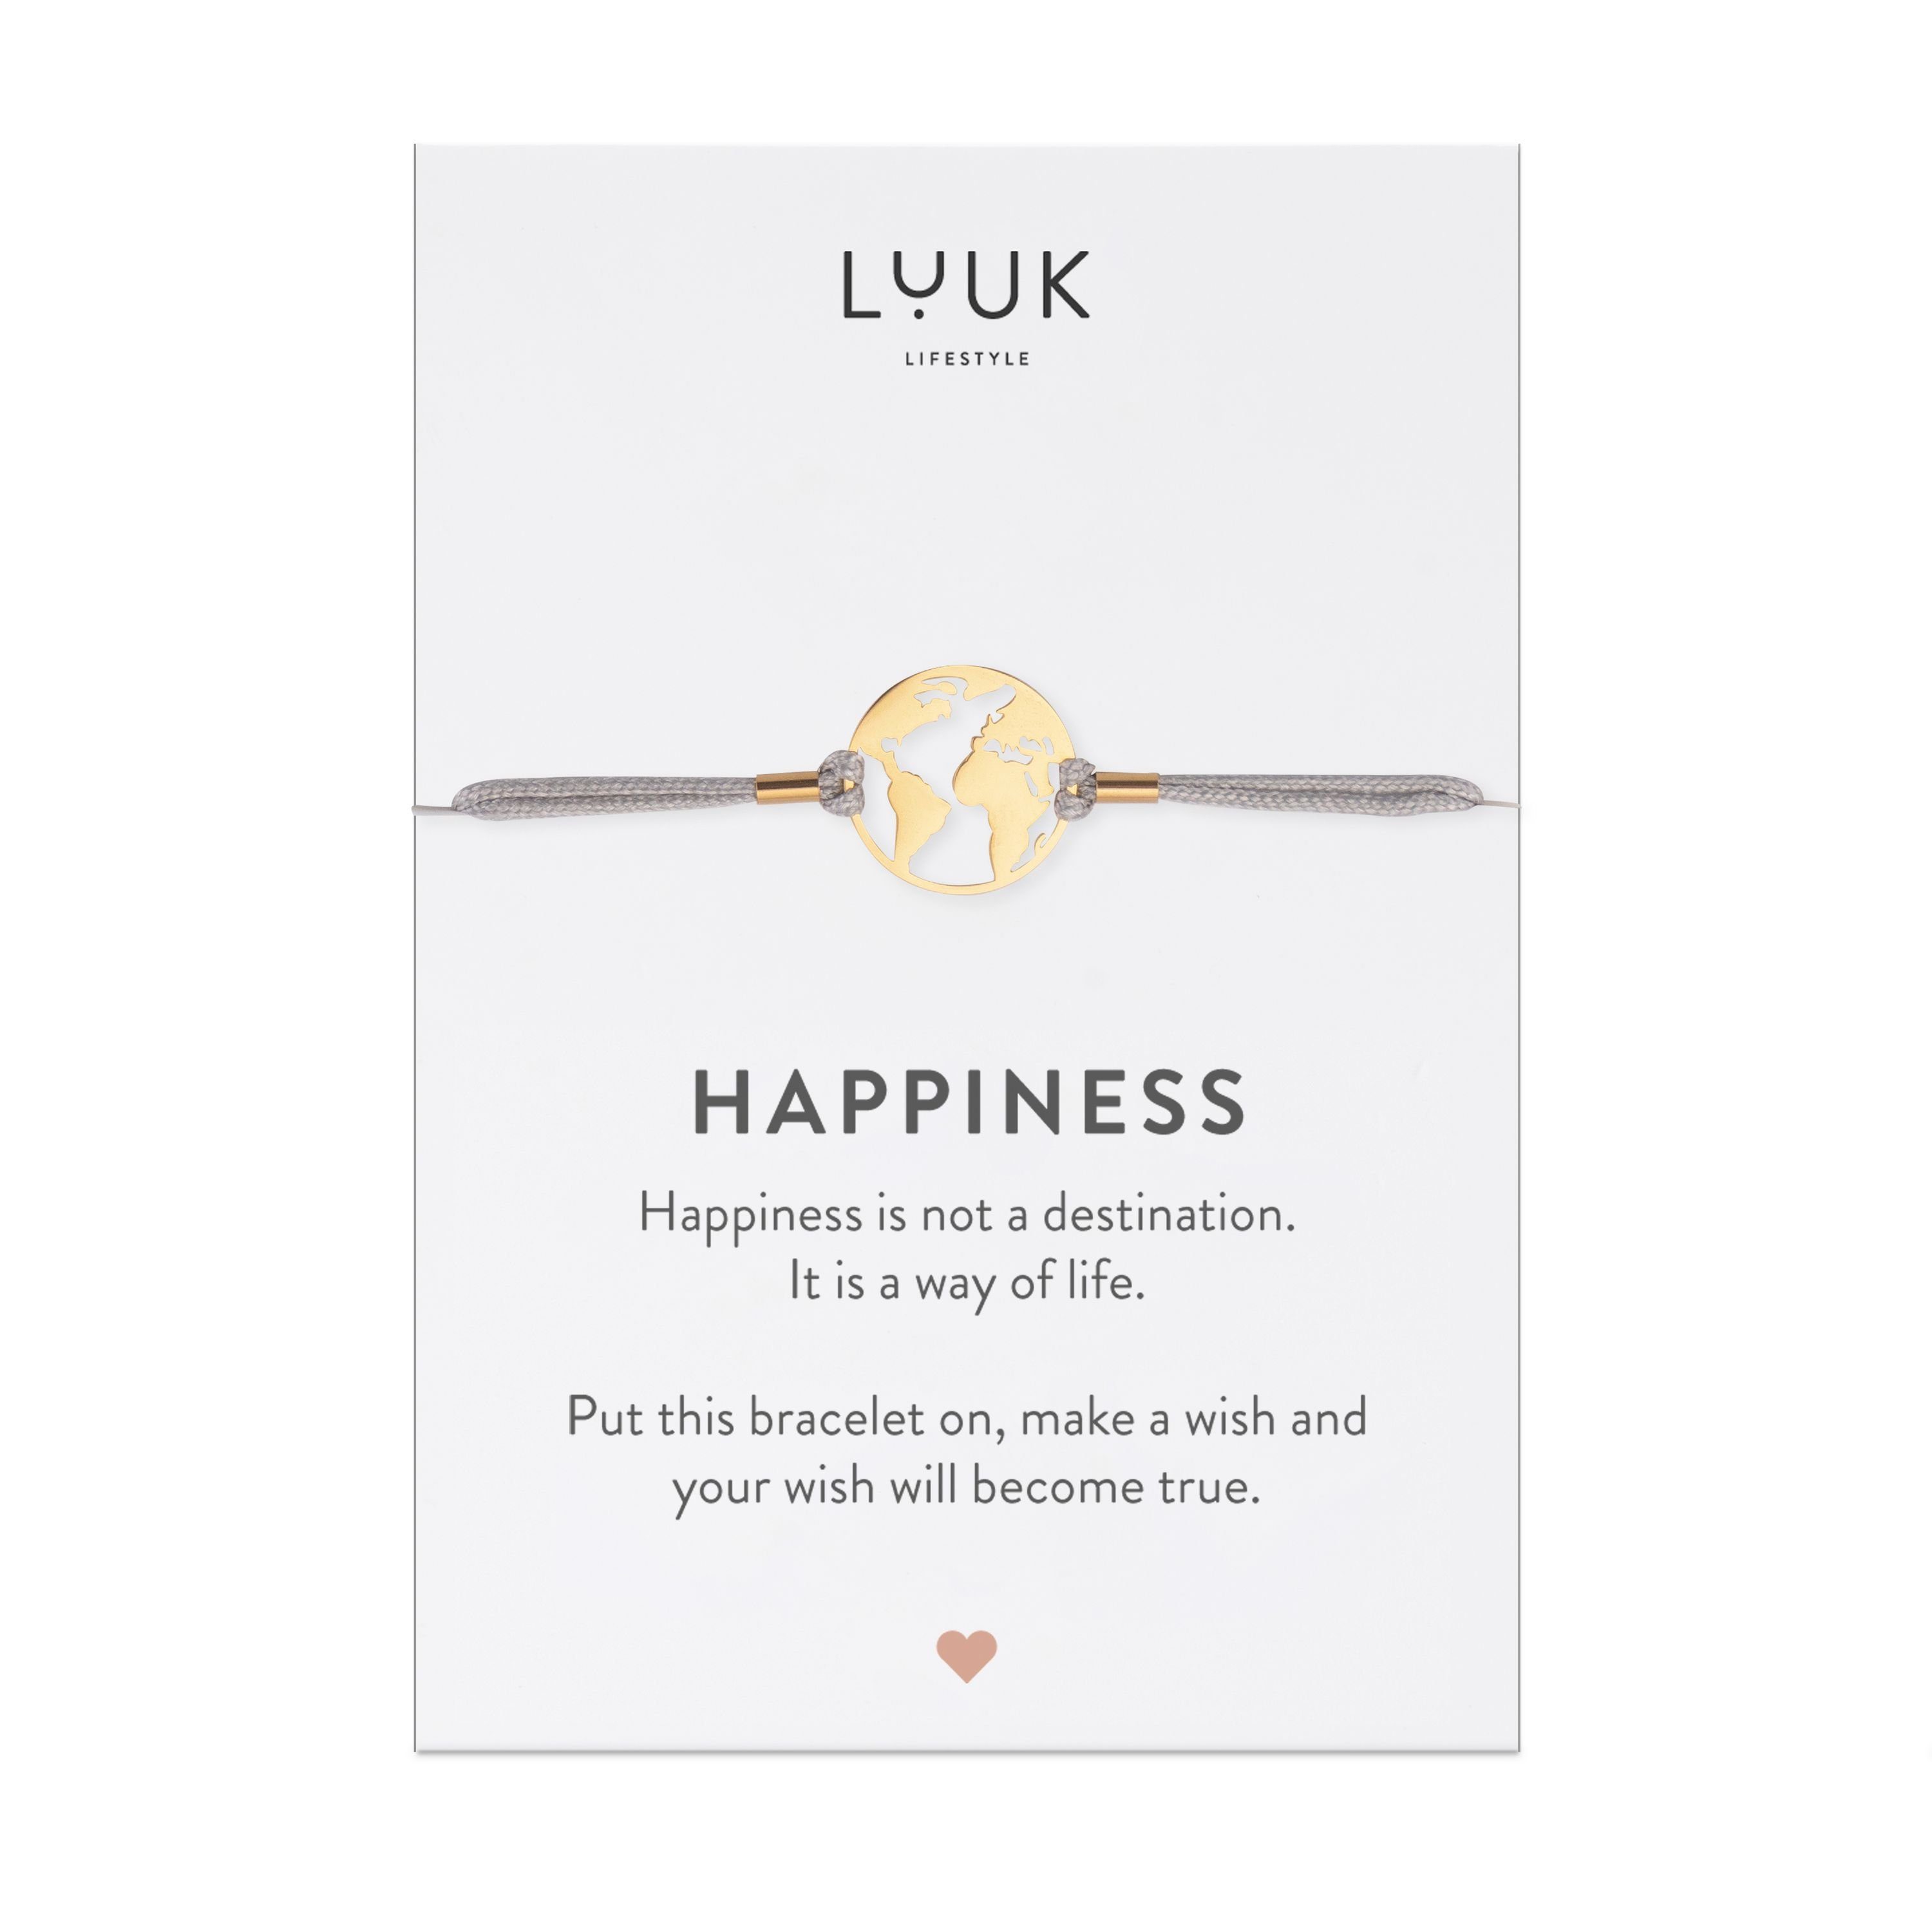 LUUK LIFESTYLE Freundschaftsarmband Weltkugel, handmade, mit Happiness Spruchkarte